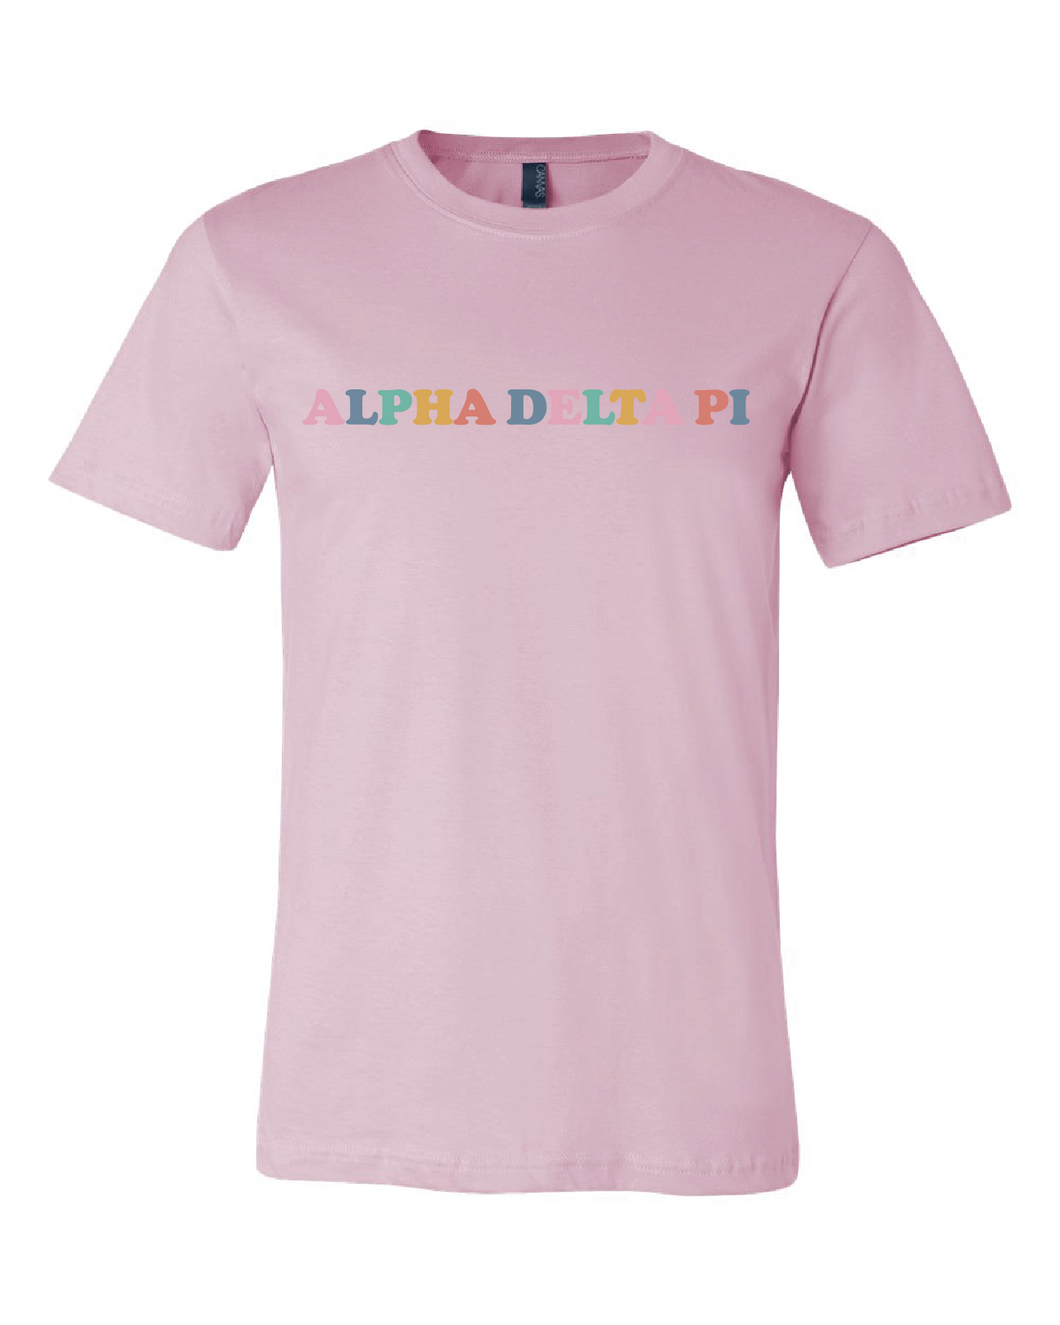 Alpha Delta Pi Multi Color Letters T-Shirt